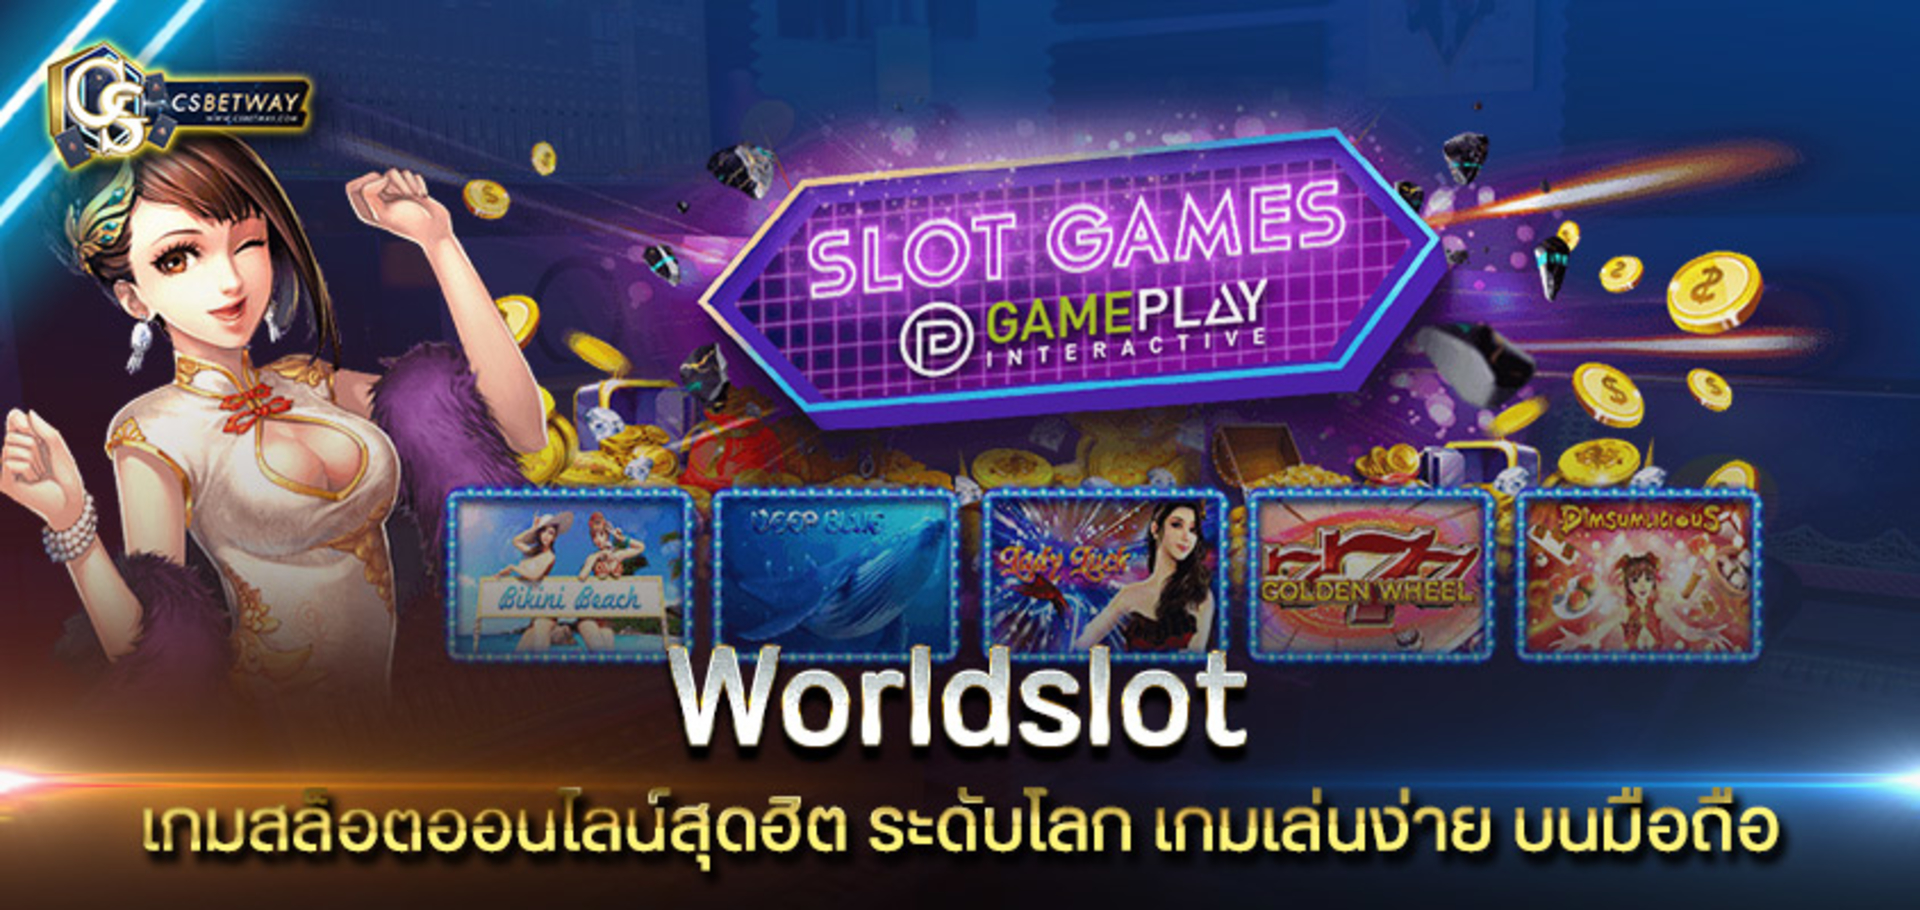 Worldslot เกมสล็อตออนไลน์สุดฮิต ระดับโลก Worldslot เกมเล่นง่าย บนมือถือ